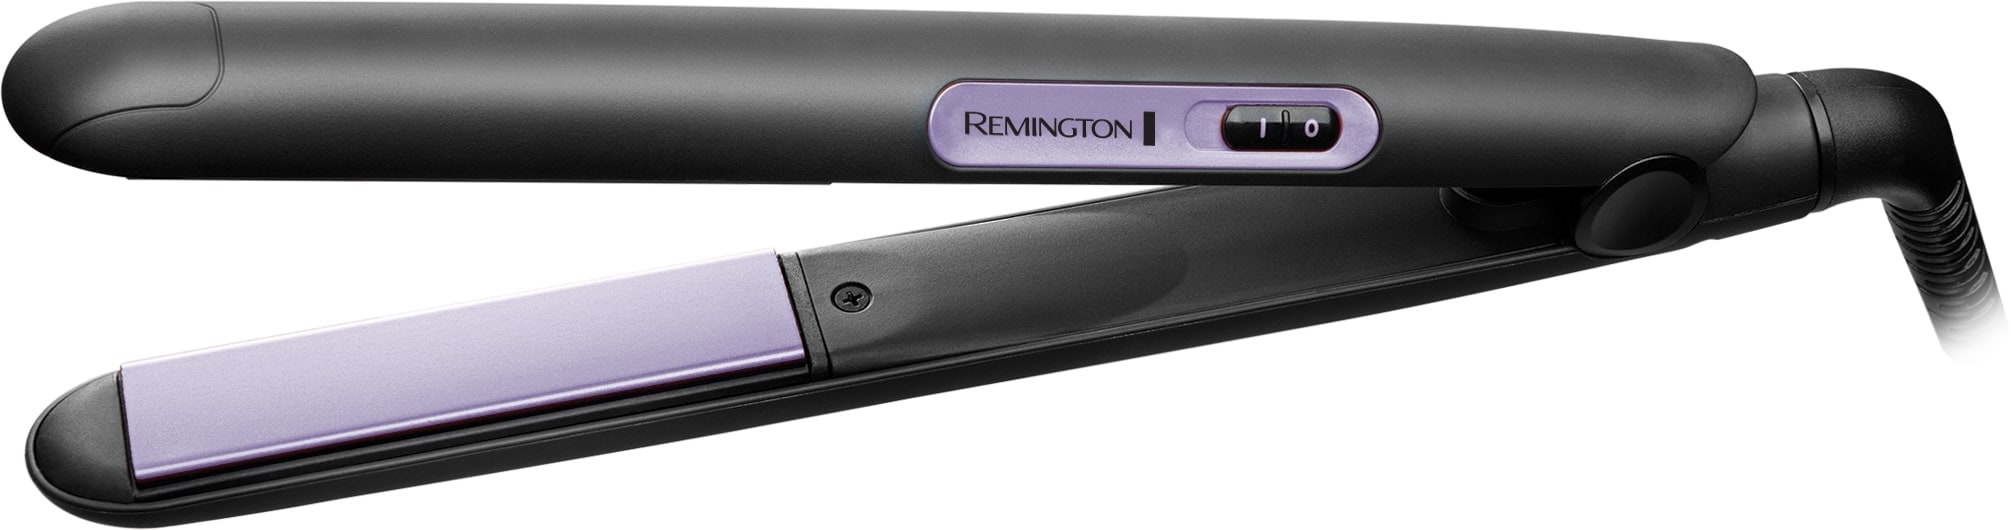 Remington Haartrockner »D3016GP«, 200 W, 1 Aufsätze, Geschenkset bestehend aus Haarglätter & 2.000 Watt Haartrockner